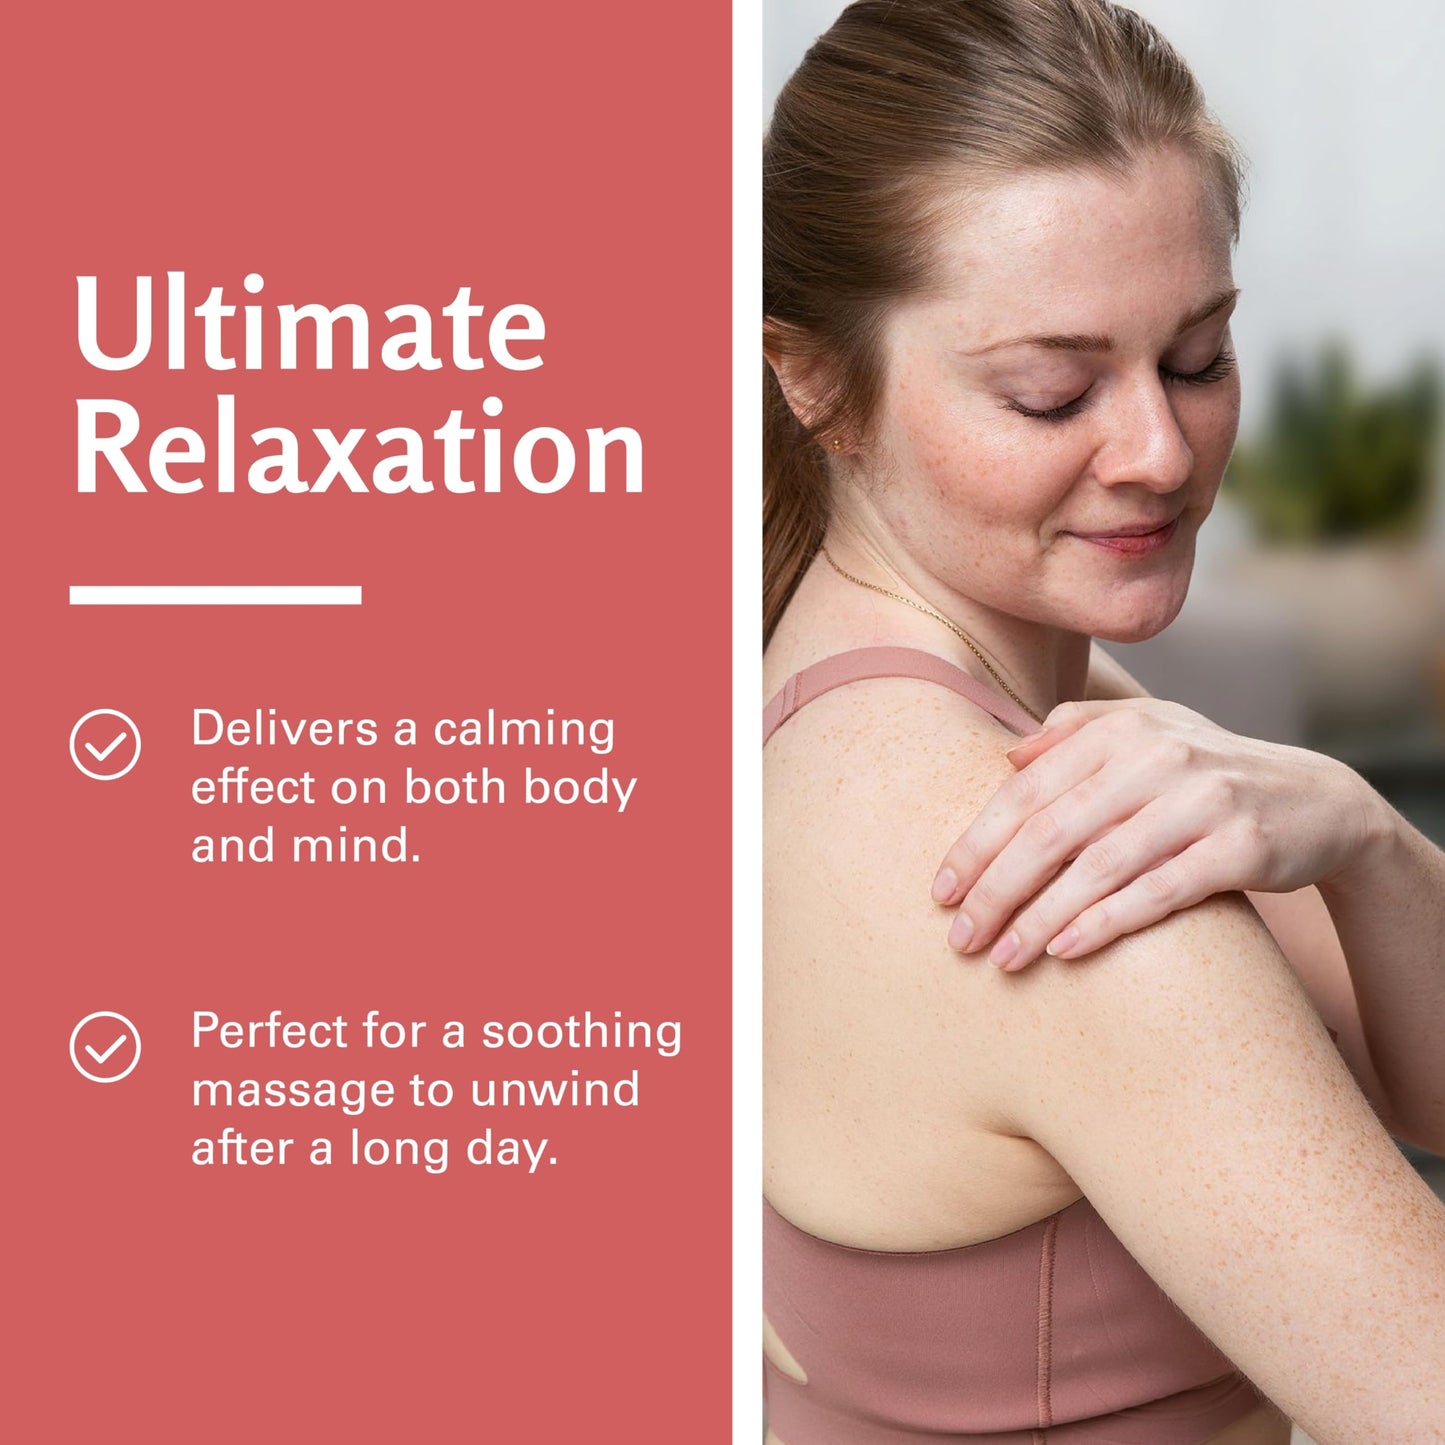 Arnica Sore Muscle Massage Oil for Massage Therapy - Anti Cellulite Massage Oil